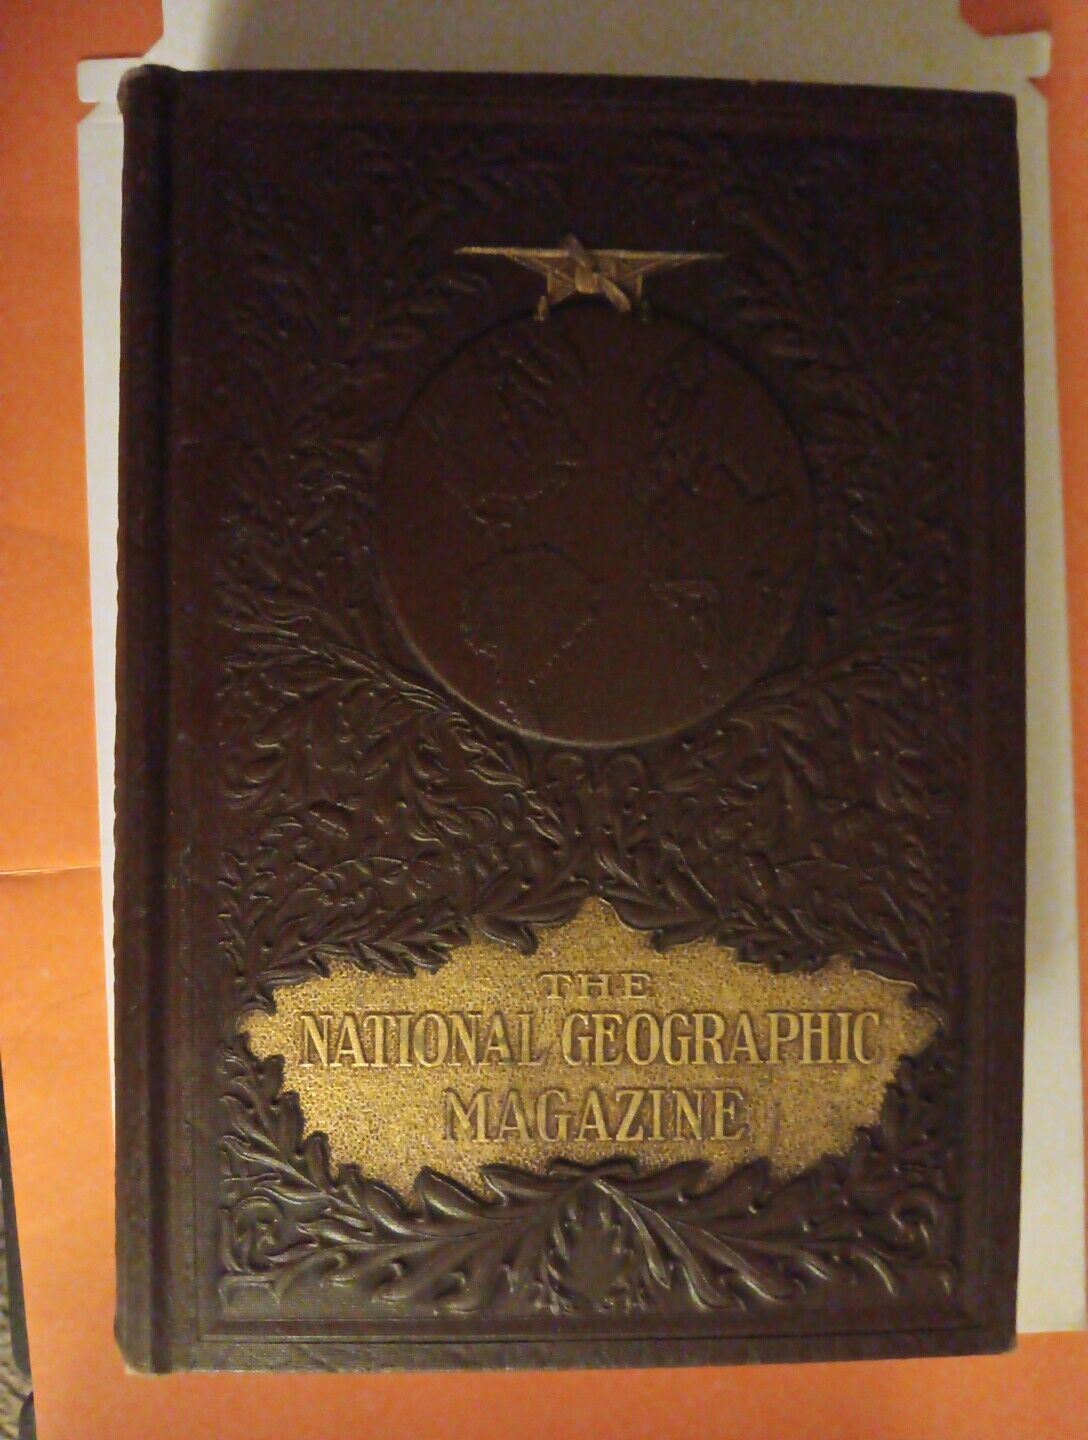 1914 JAN-JUNE National Geographic Magazine Bound Vol. 25 COLLECTOR EDIT.SCARCE.